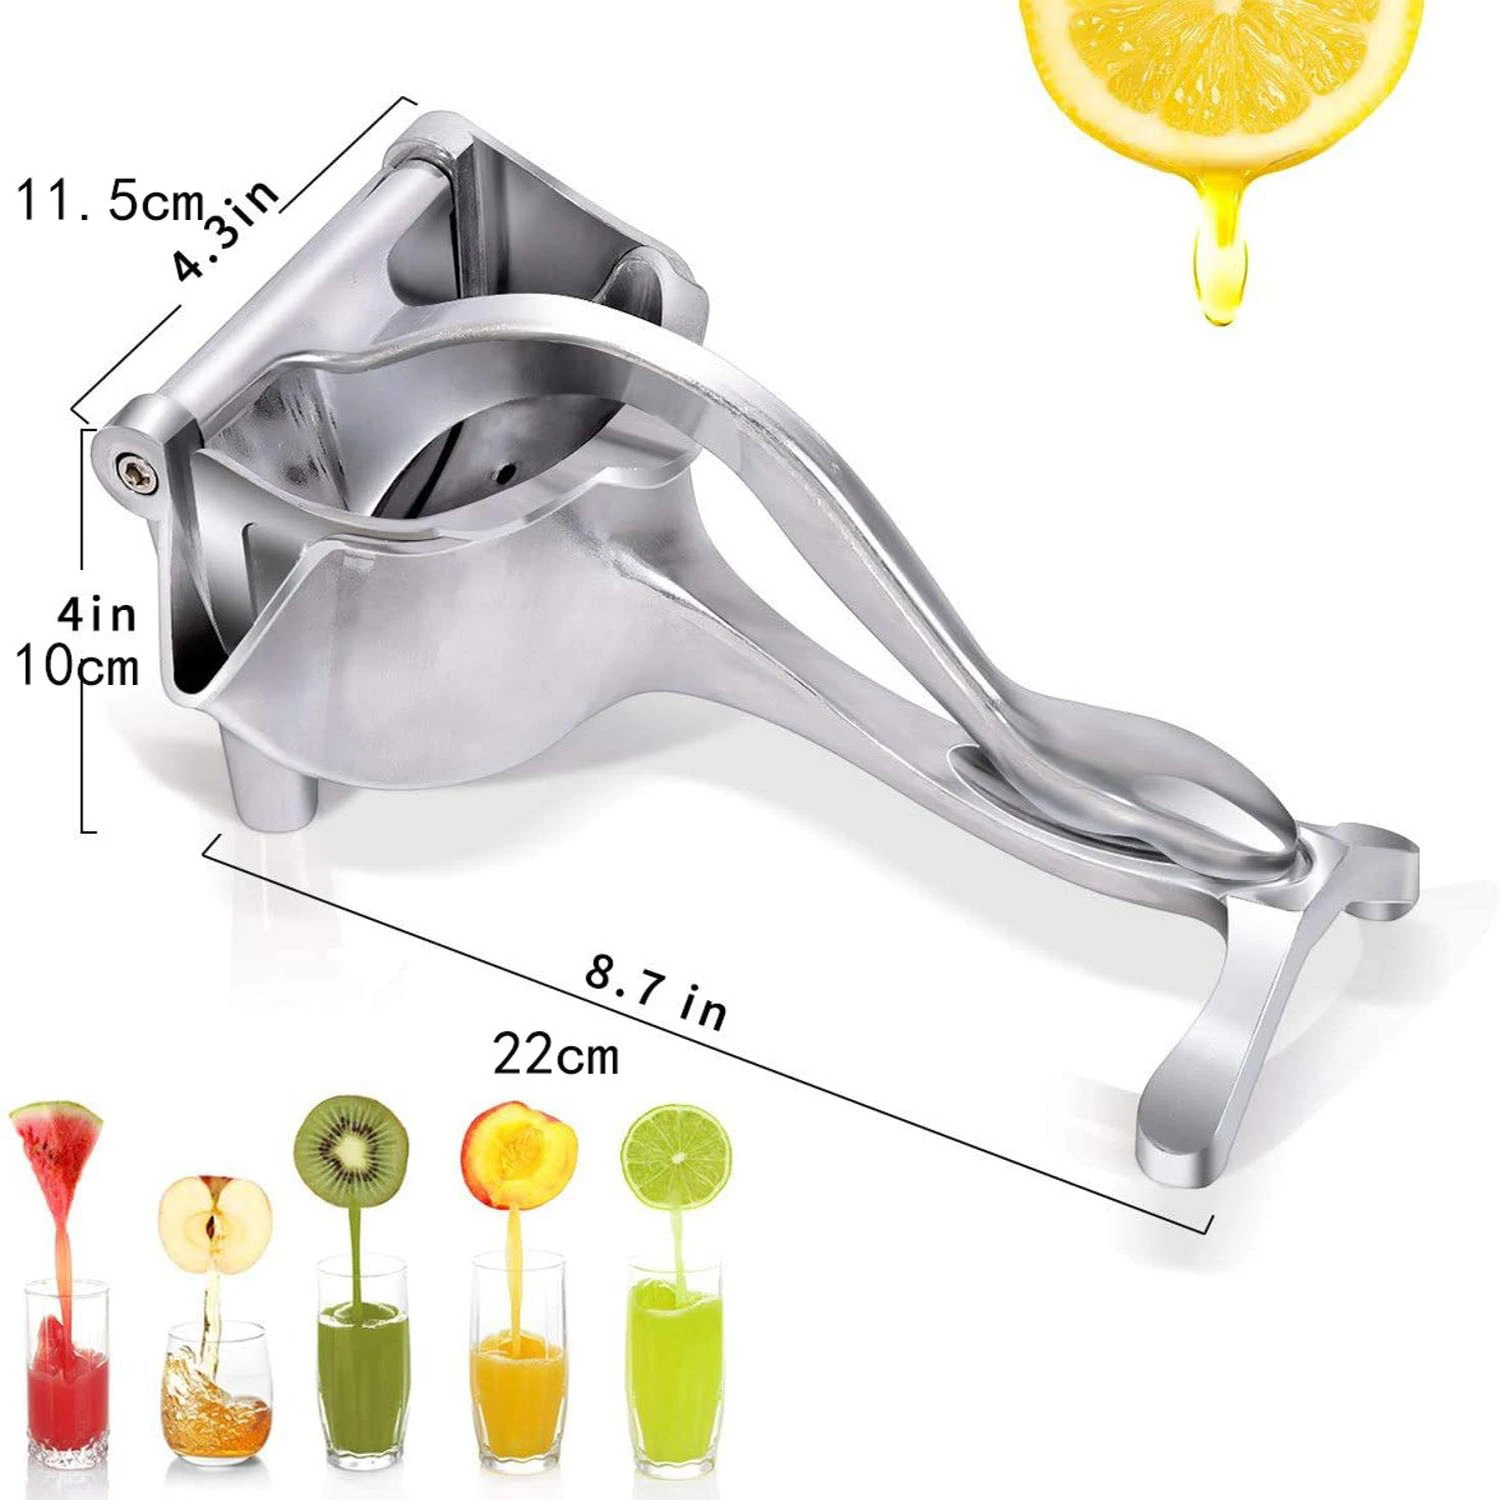 Manual-Juice-Squeezer-Pomegranate-Orange-Lemon-Sugar-Cane-Juice-Kitchen-Fruit-Tool-Aluminum-Alloy-Hand-Pressure.jpg_Q90.jpg_